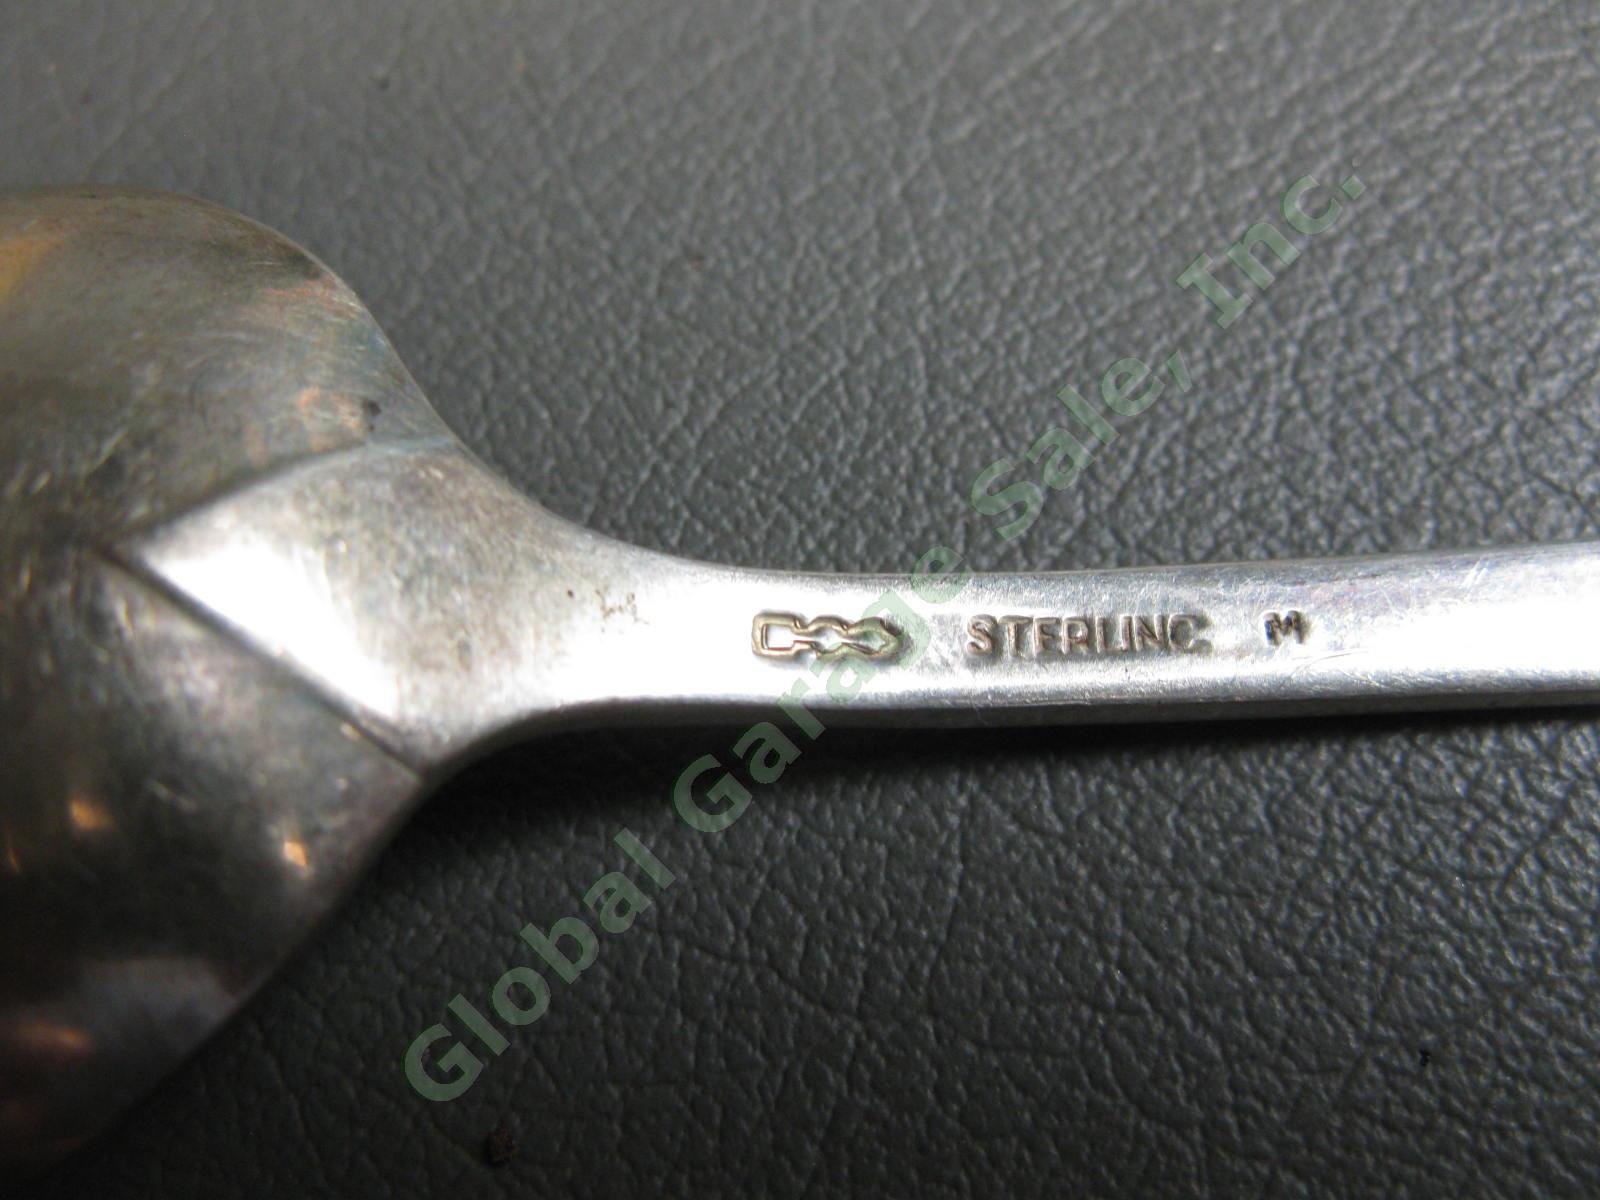 12 Dominick & Haff Pointed Antique Sterling Silver Teaspoon Spoon Set KEM 357g 6